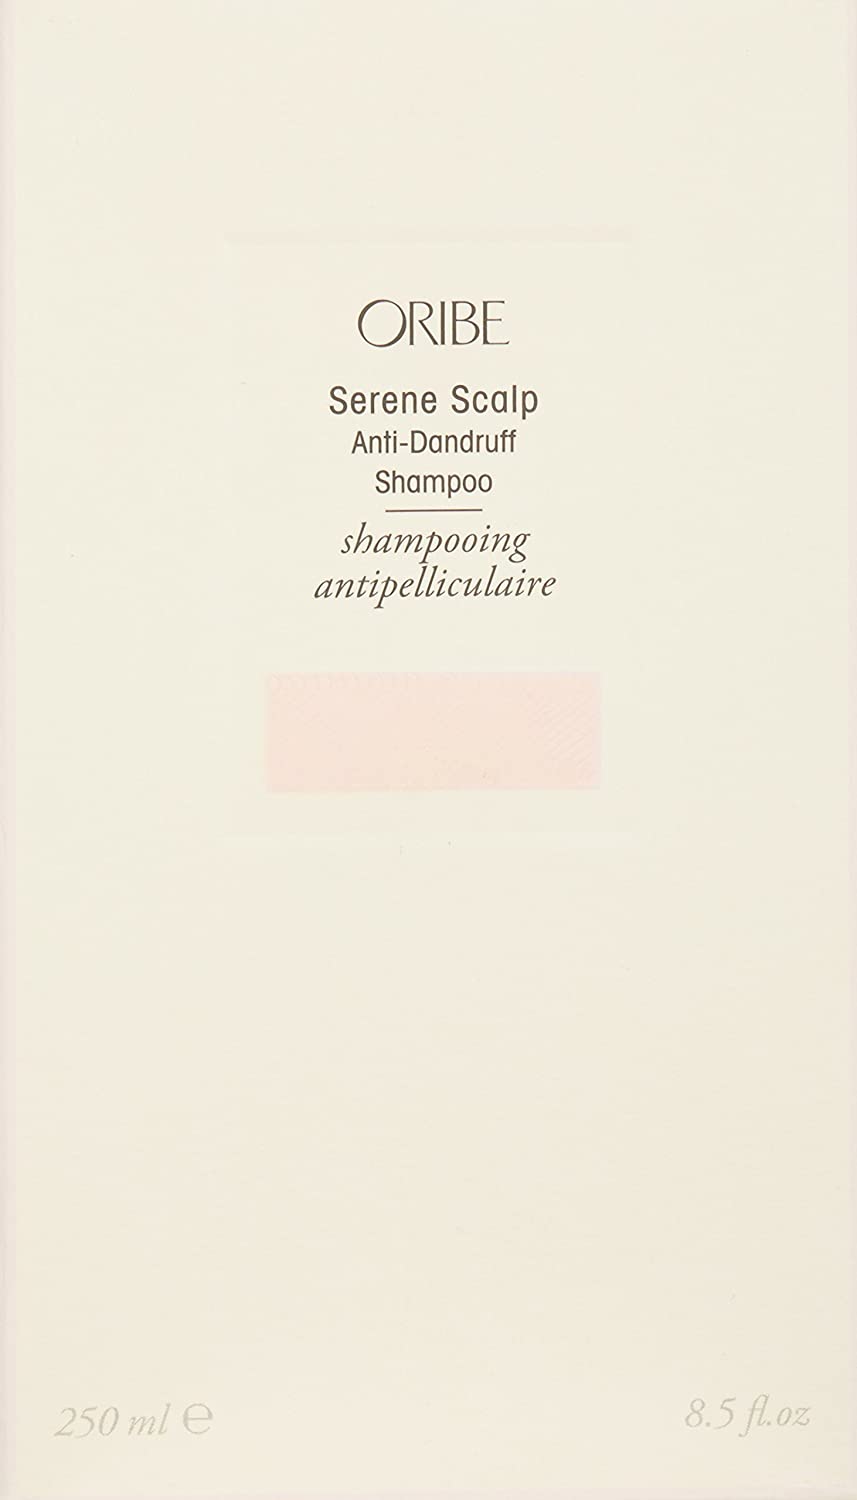 Oribe Serene Scalp Anti-Dandruff Shampoo - 250 ml-4